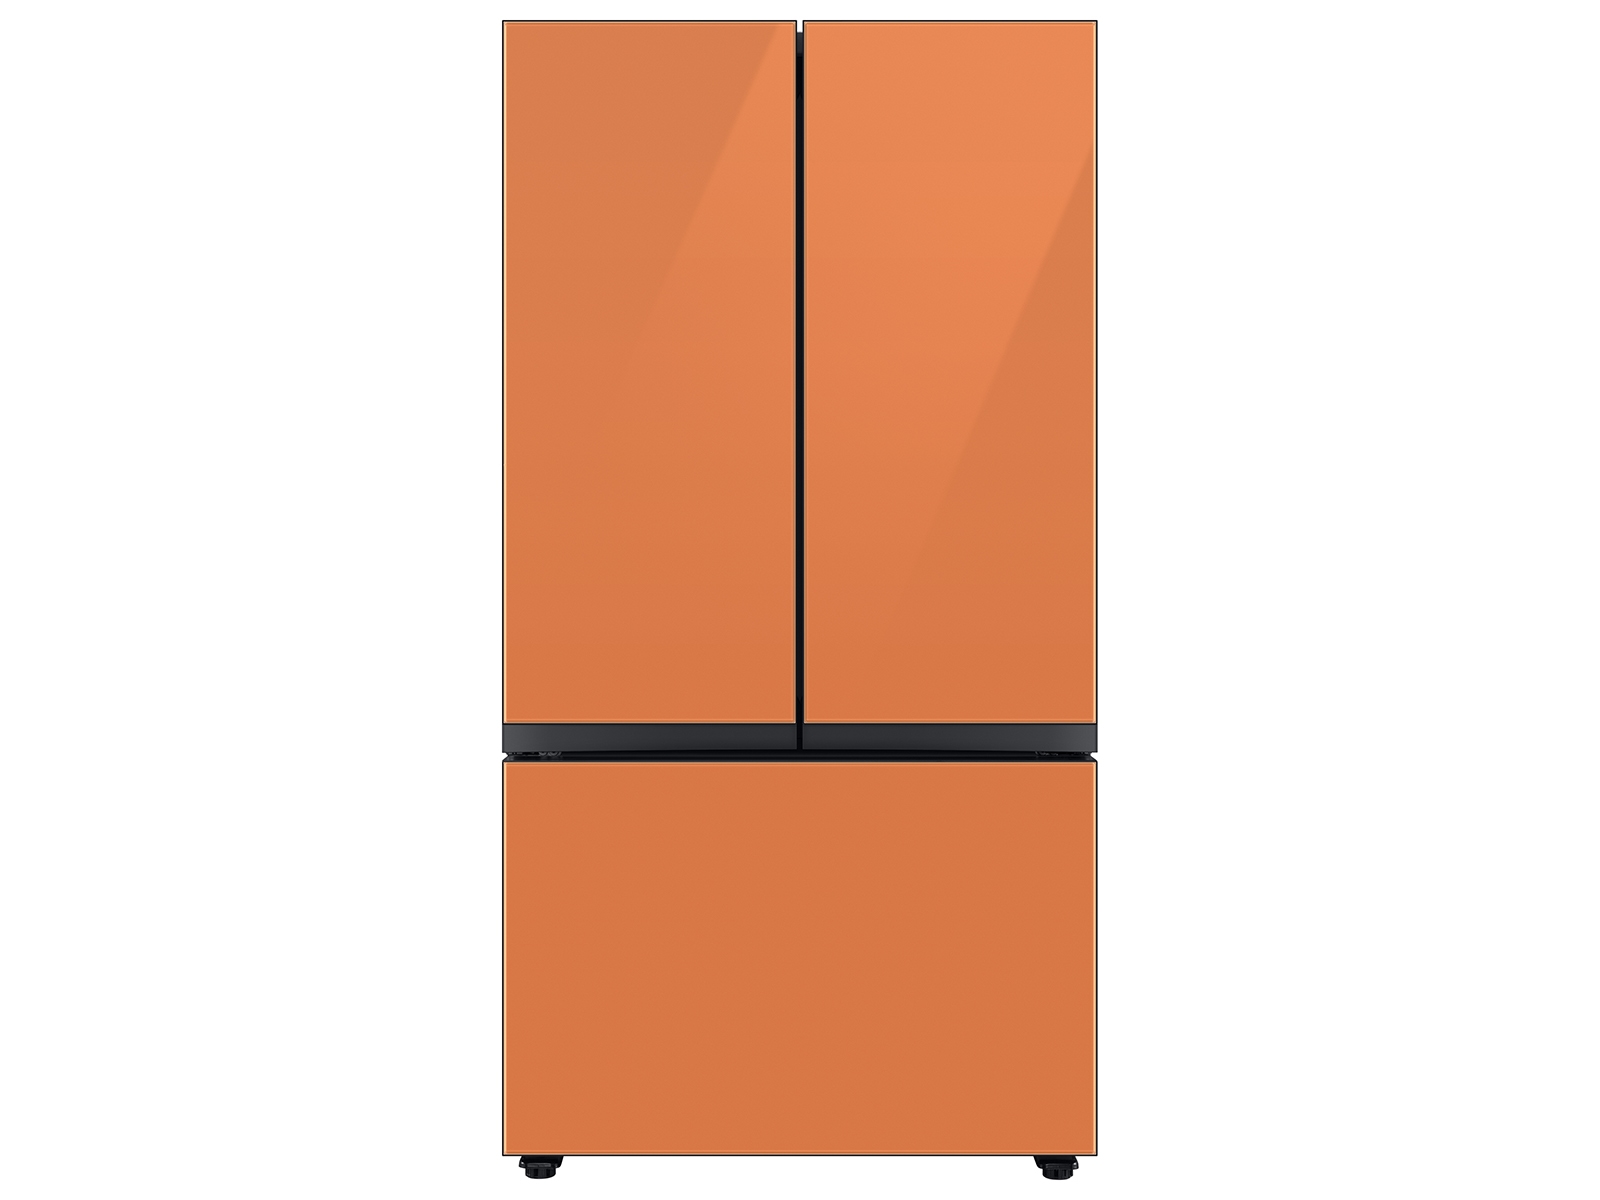 Samsung Bespoke 3-Door French Door Refrigerator in Stainless Steel (30 cu. ft.) with Beverage Center™ in Clementine Glass(BNDL-1650309992989)